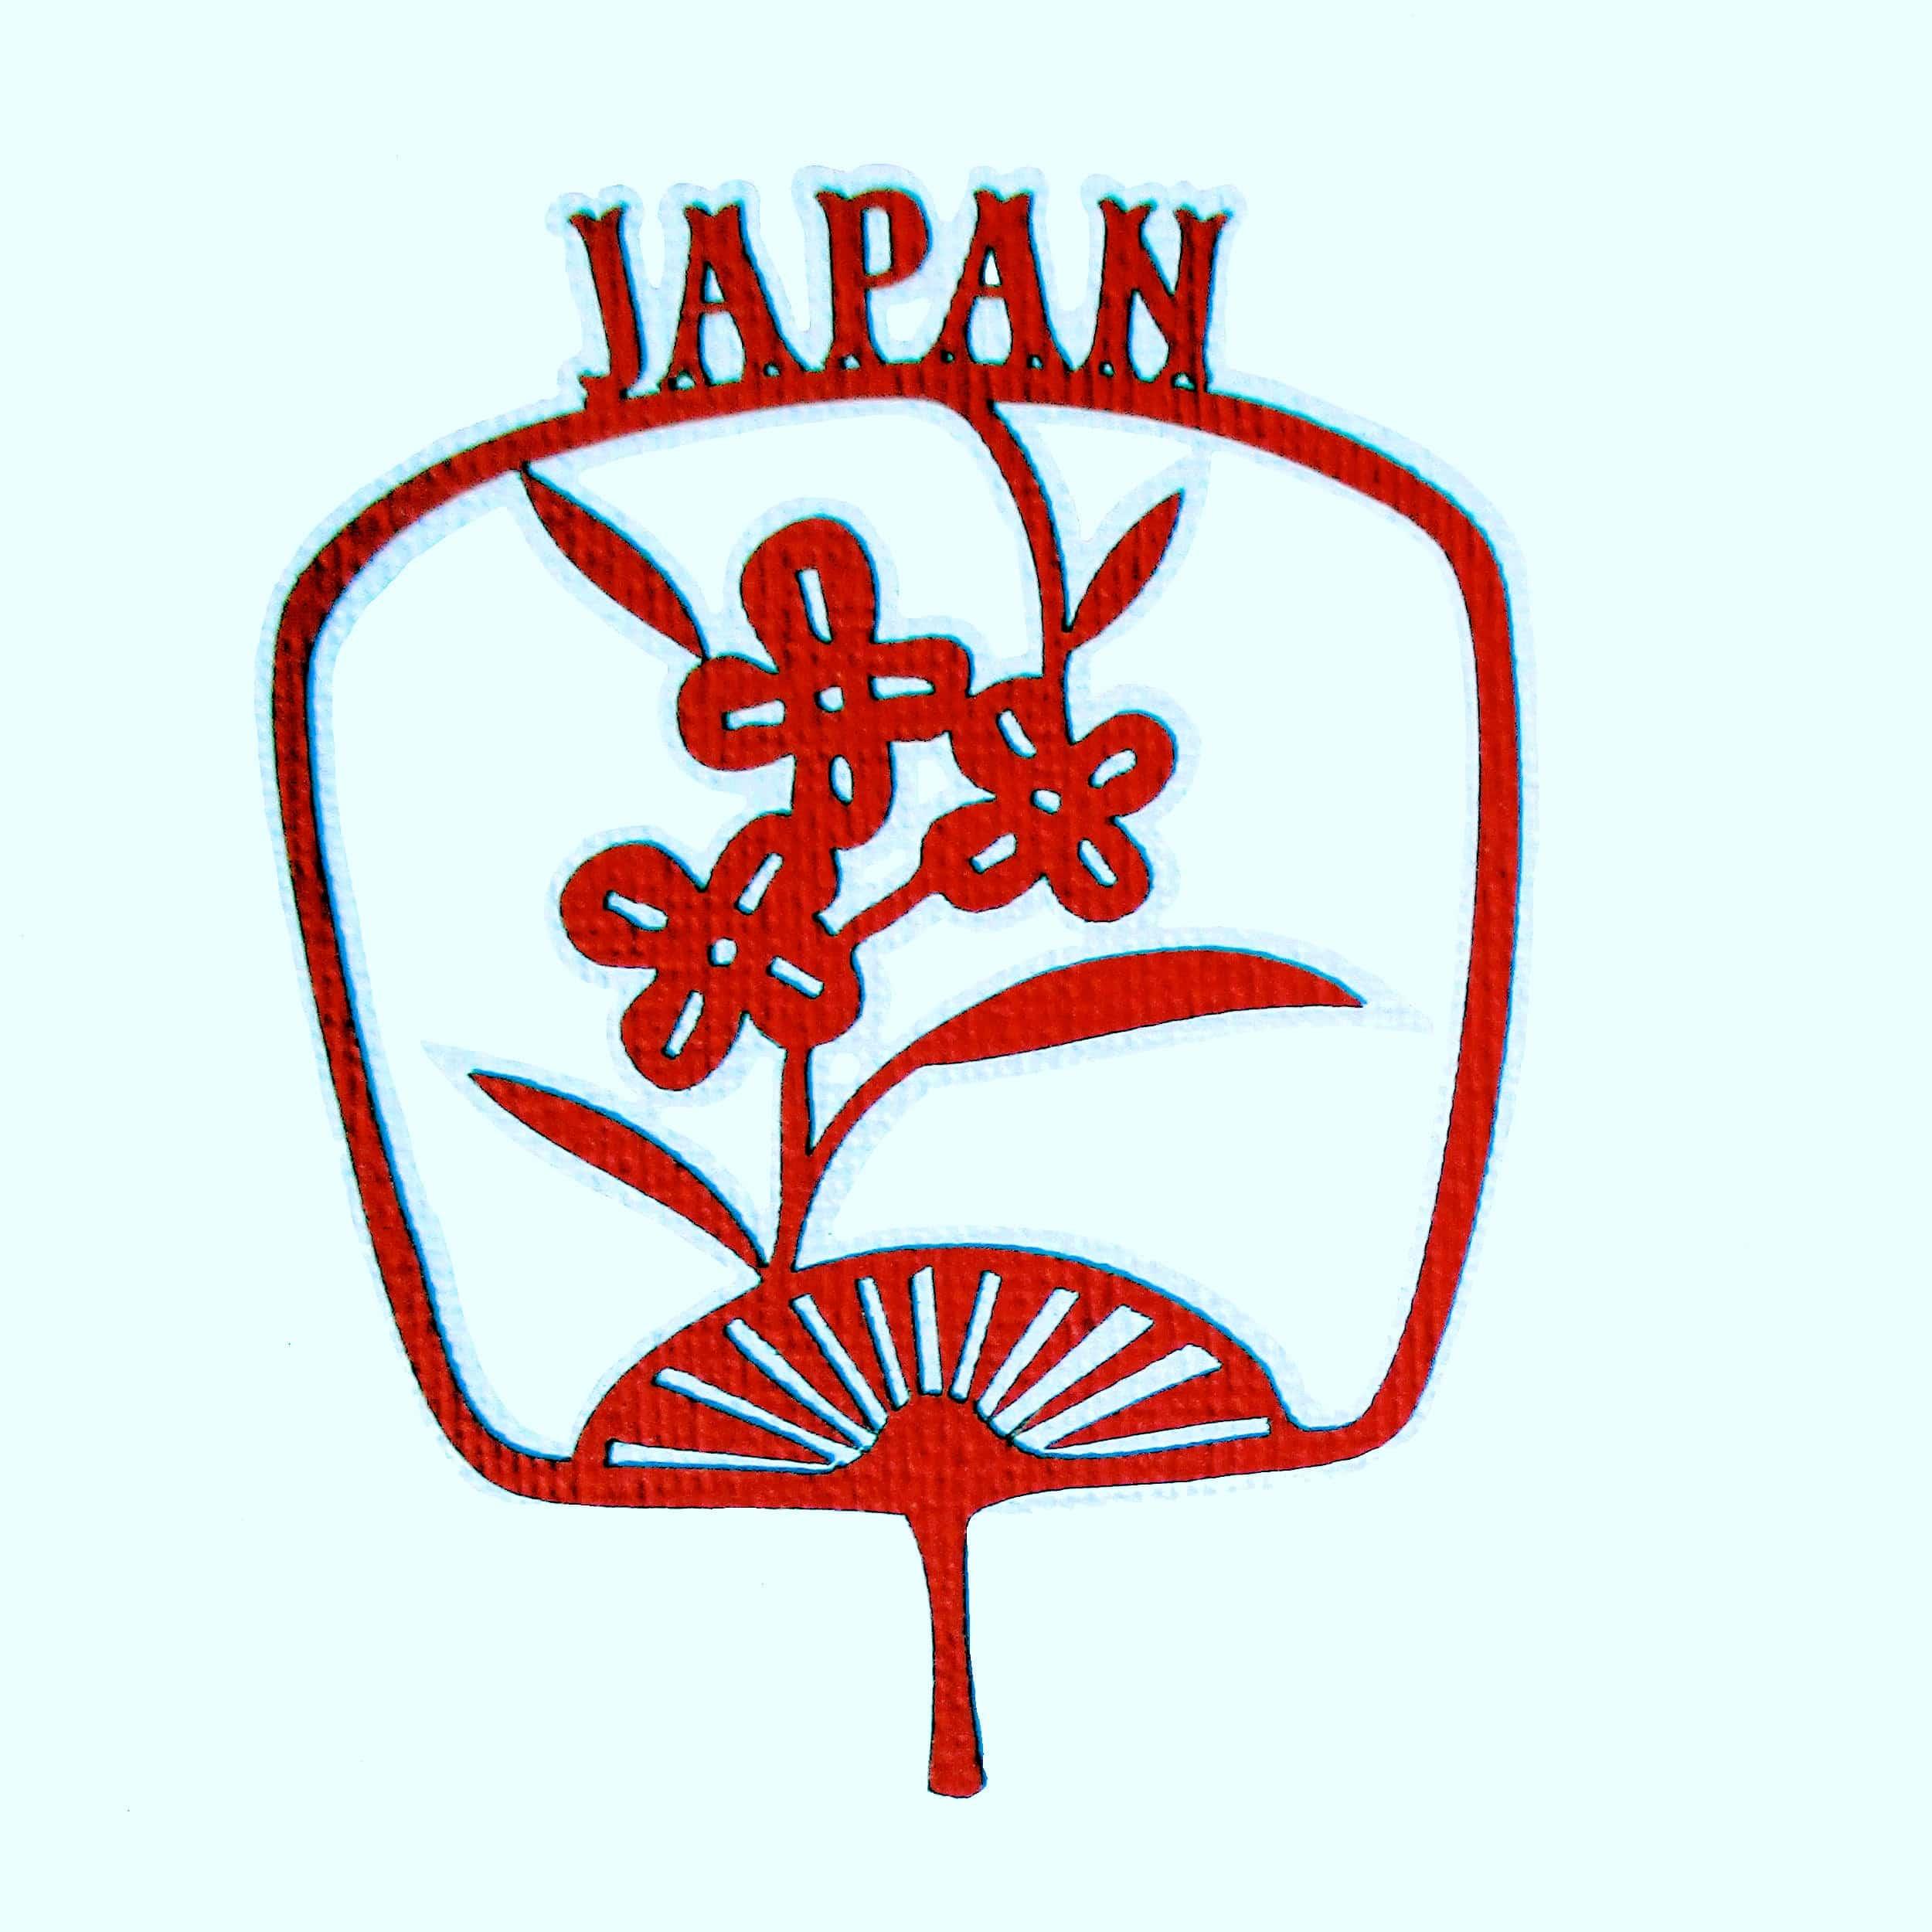 Japan Decorative Fan 3 x 3 Scrapbook Laser Embellishment by SSC Laser Designs